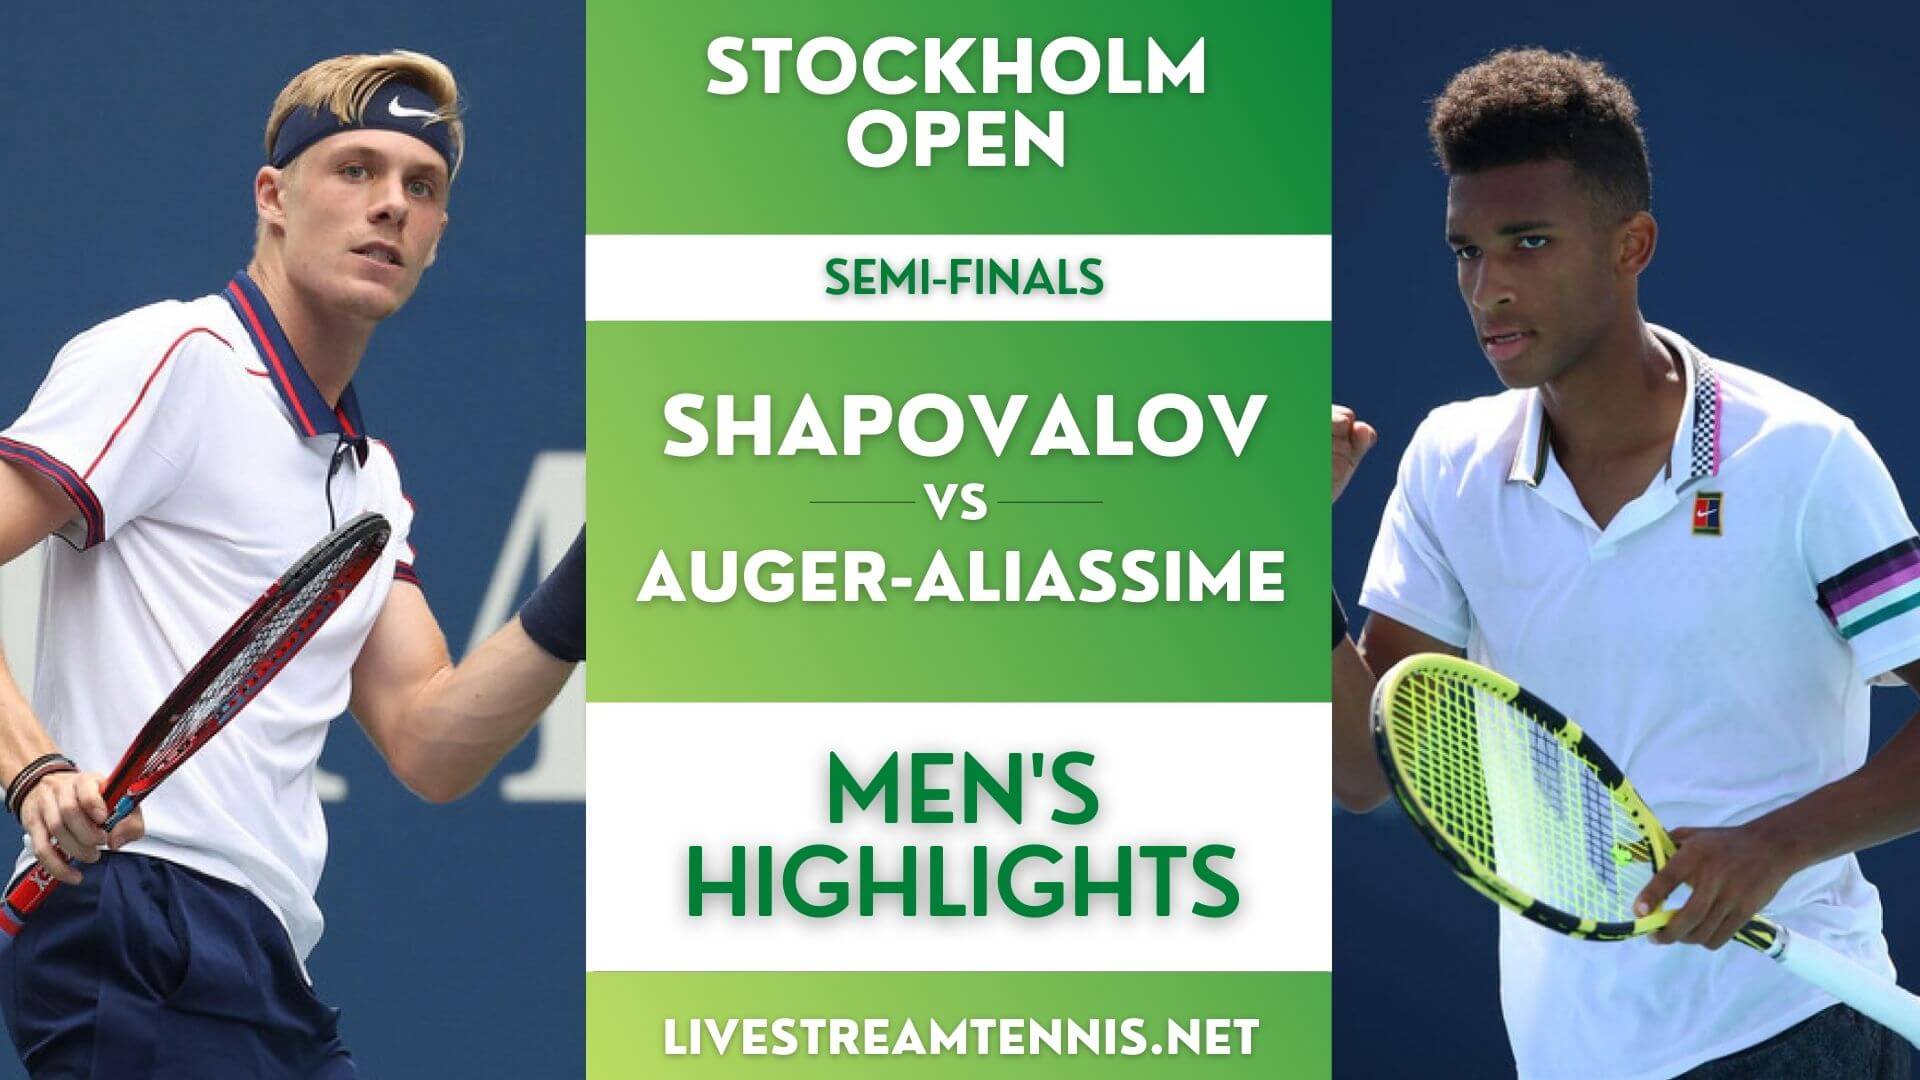 Stockholm Open ATP Semi Final 2 Highlights 2021